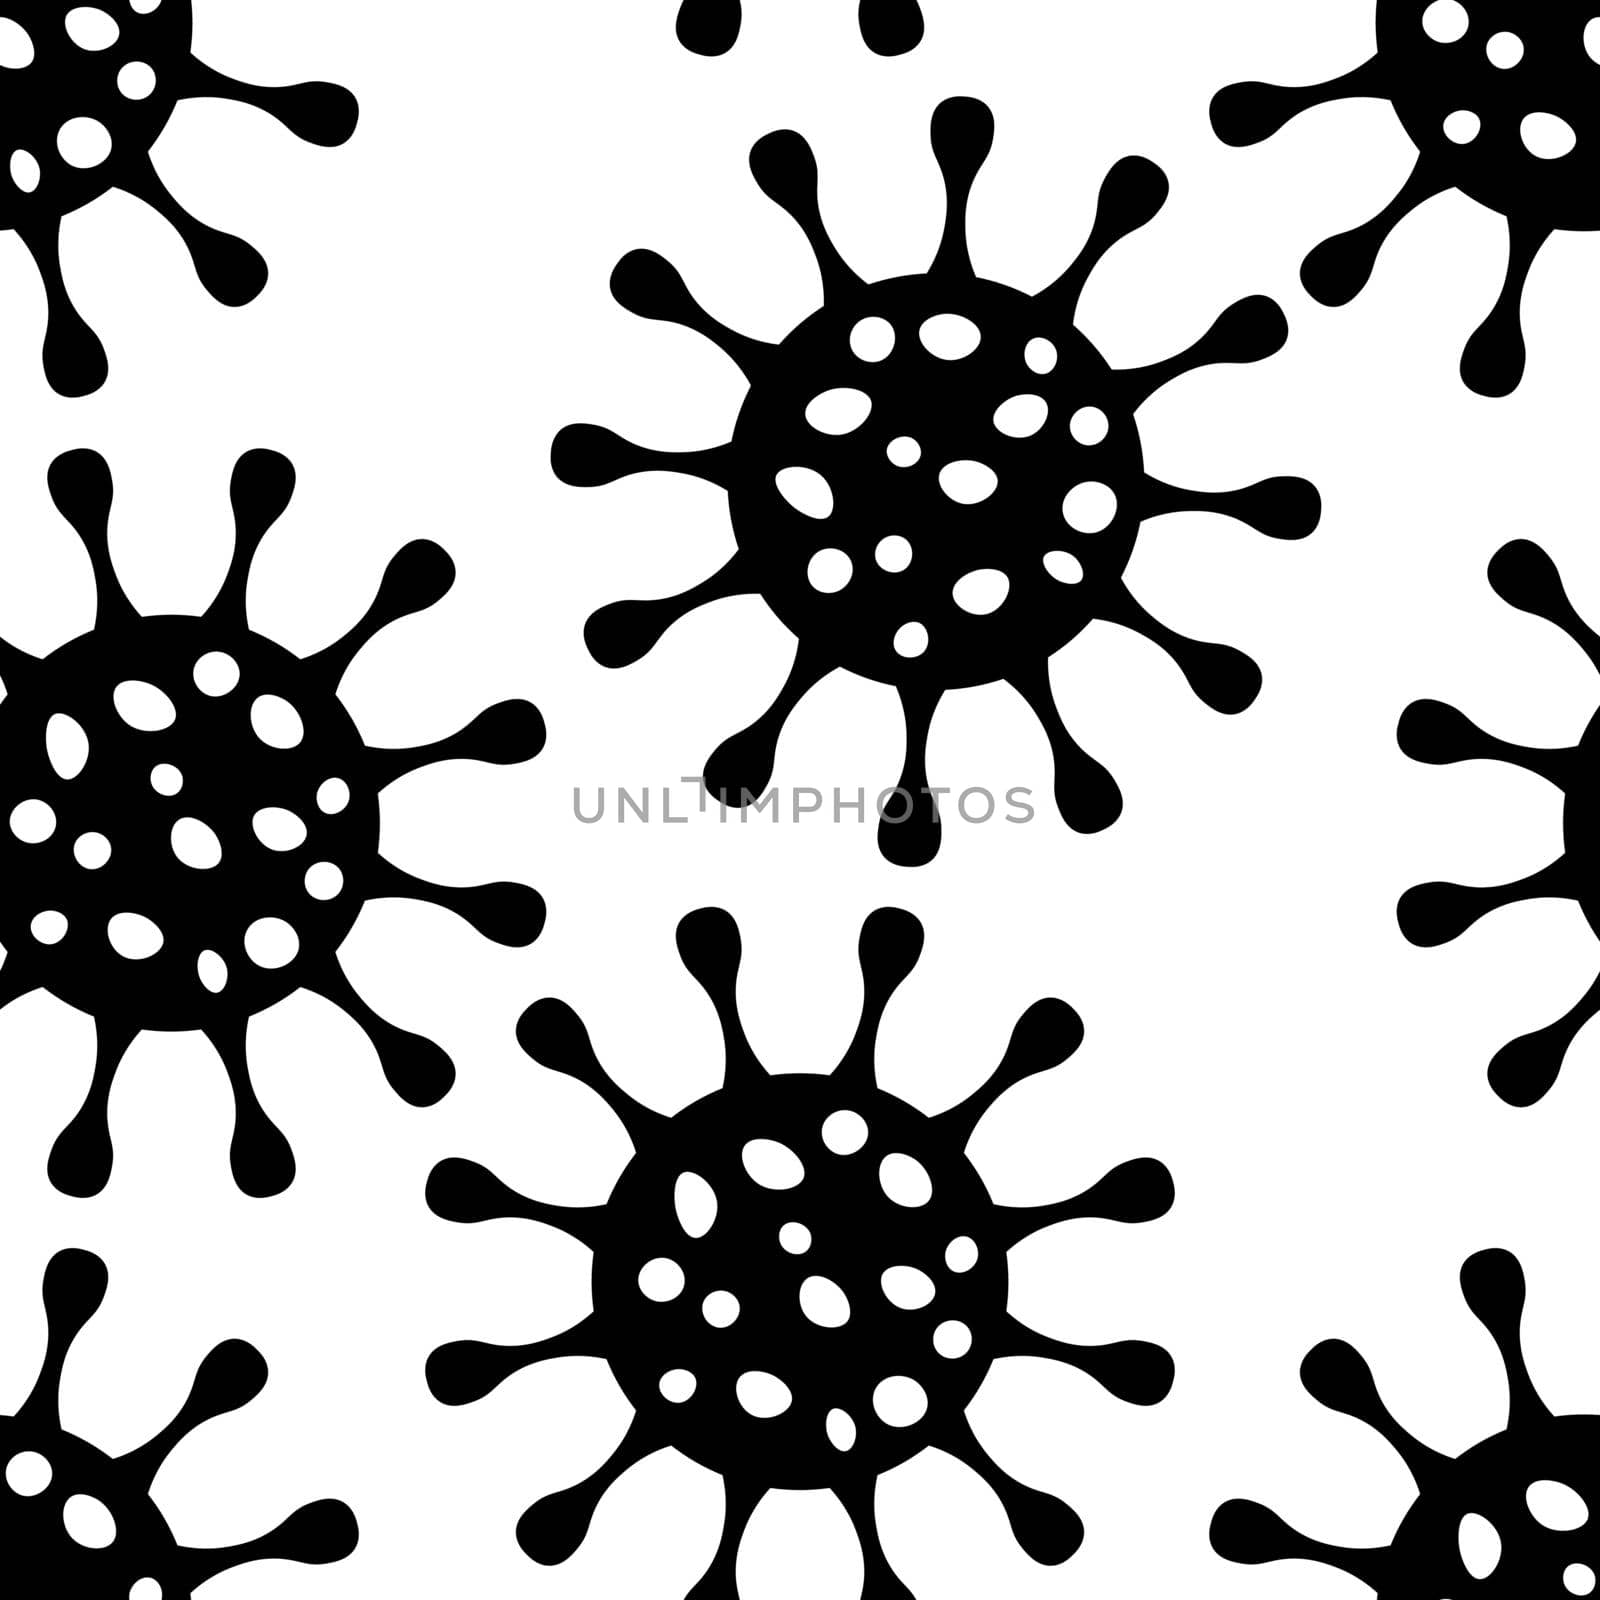 Medical seamless pattern with bacteria on white background. Stop COVID-19. Coronavirus. Pneumonia. Virus infection epidemic sick. by allaku